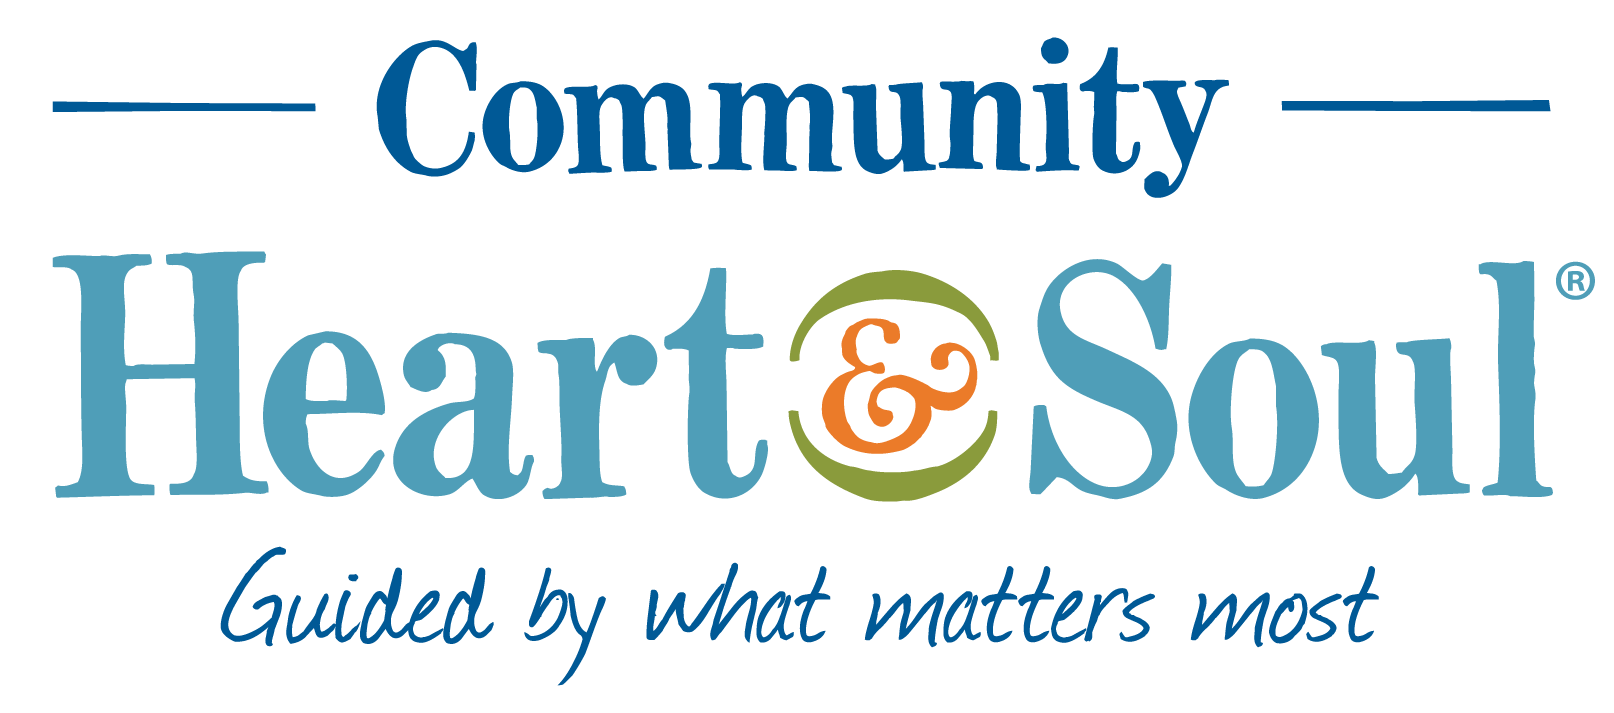 Community Heart & Soul logo